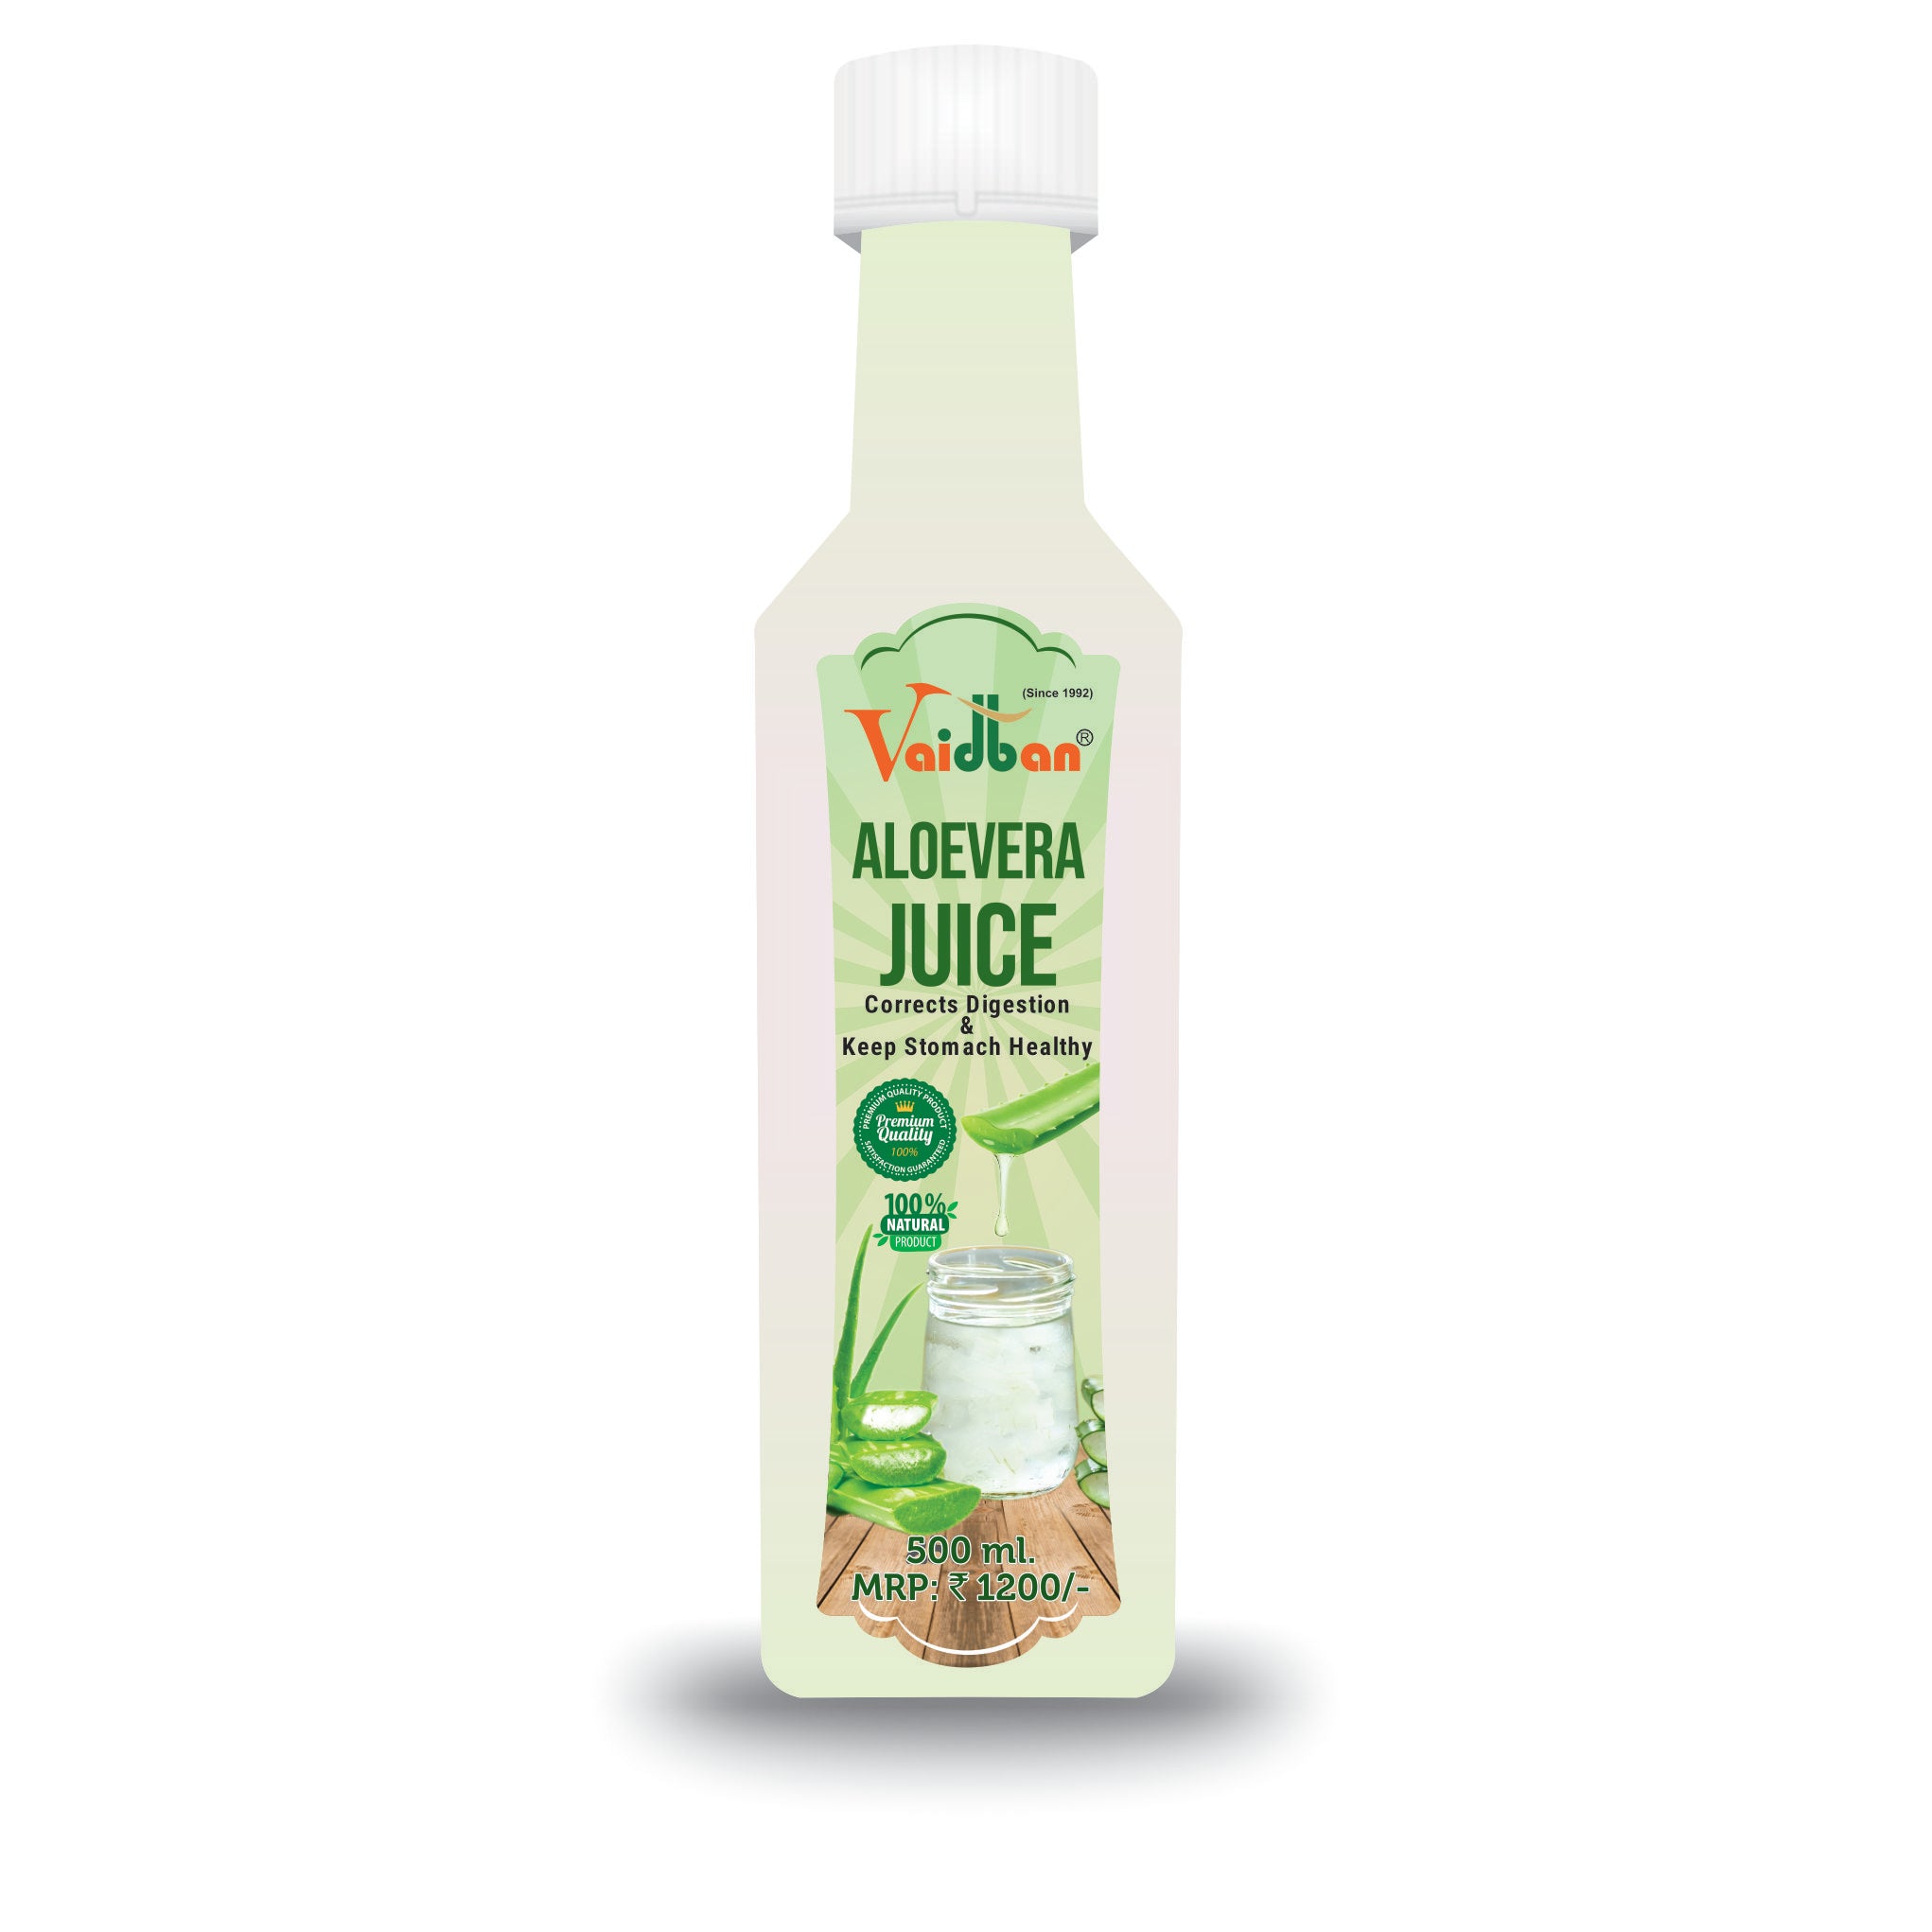 Vaidban Aloe Vera Juice - 500ml | Improves Digestion